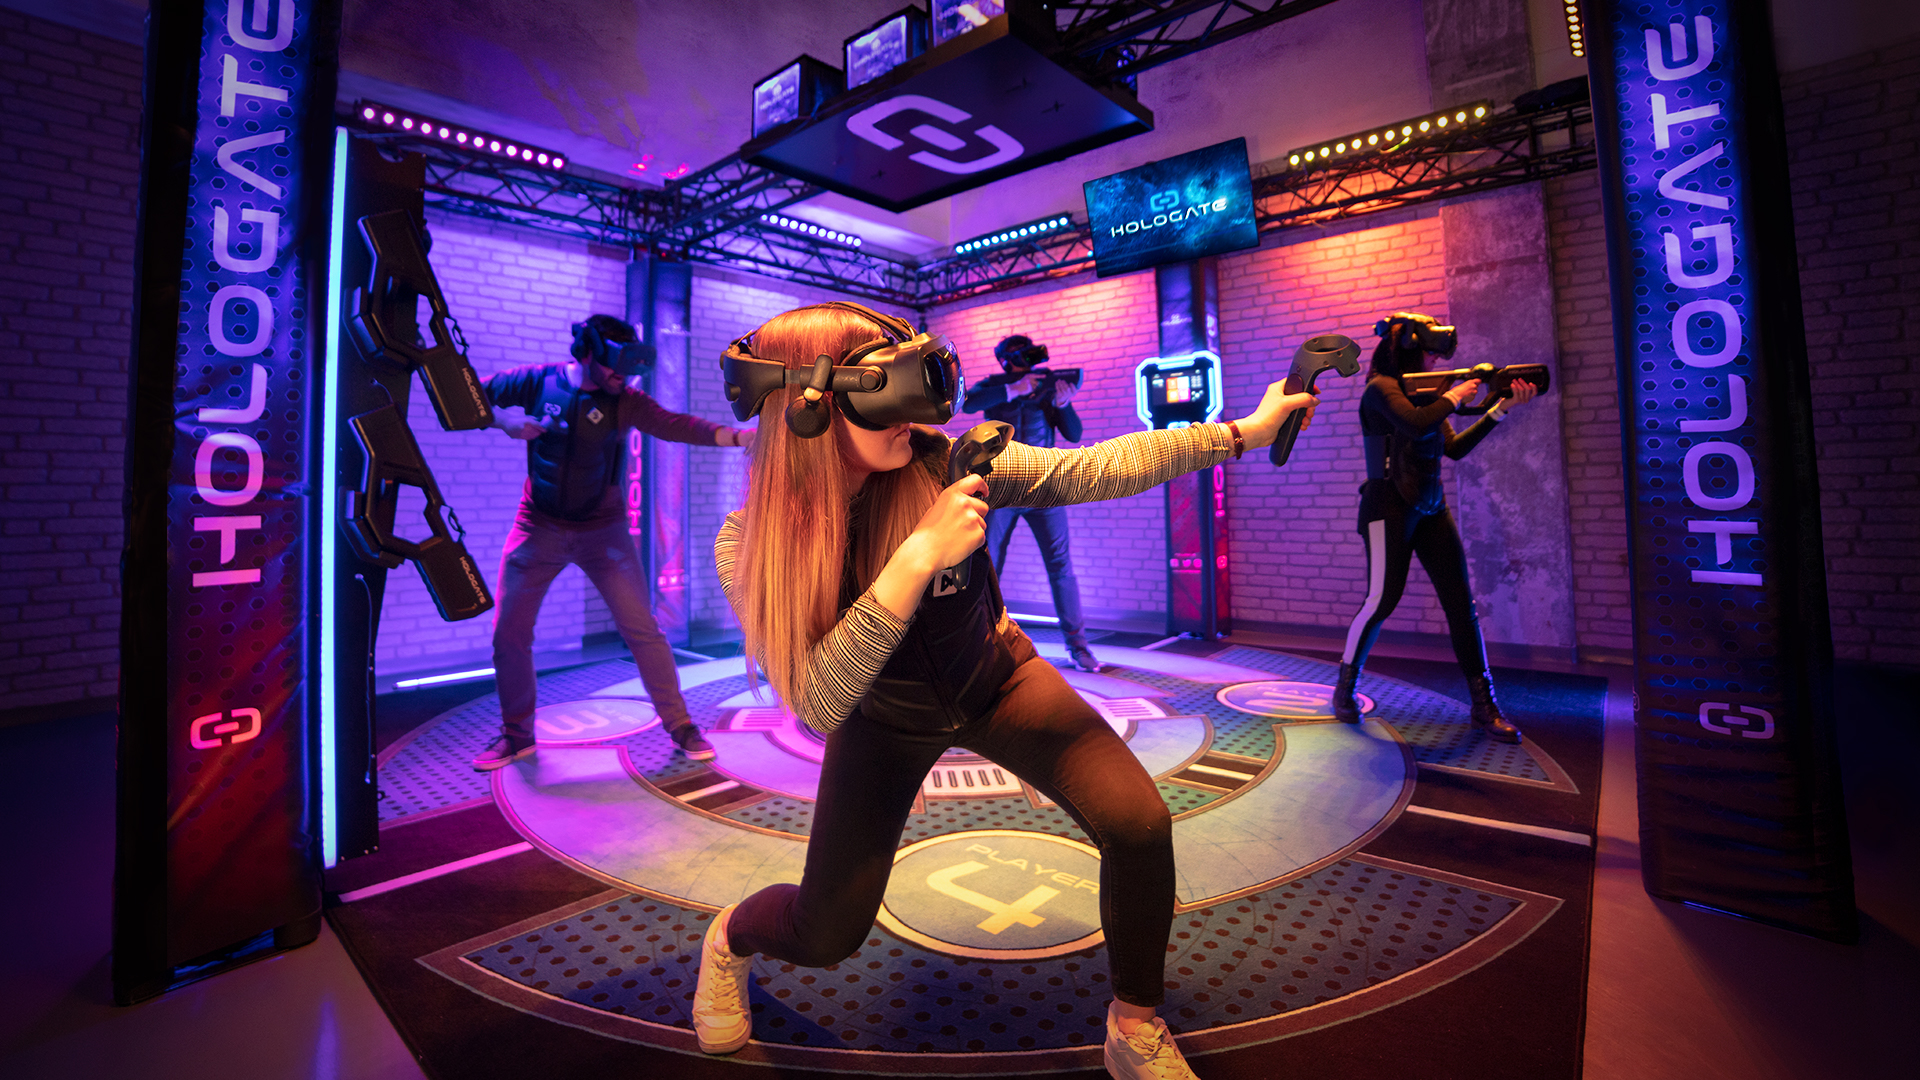 Does Virtual Reality Make Sense for Bowling Centers?